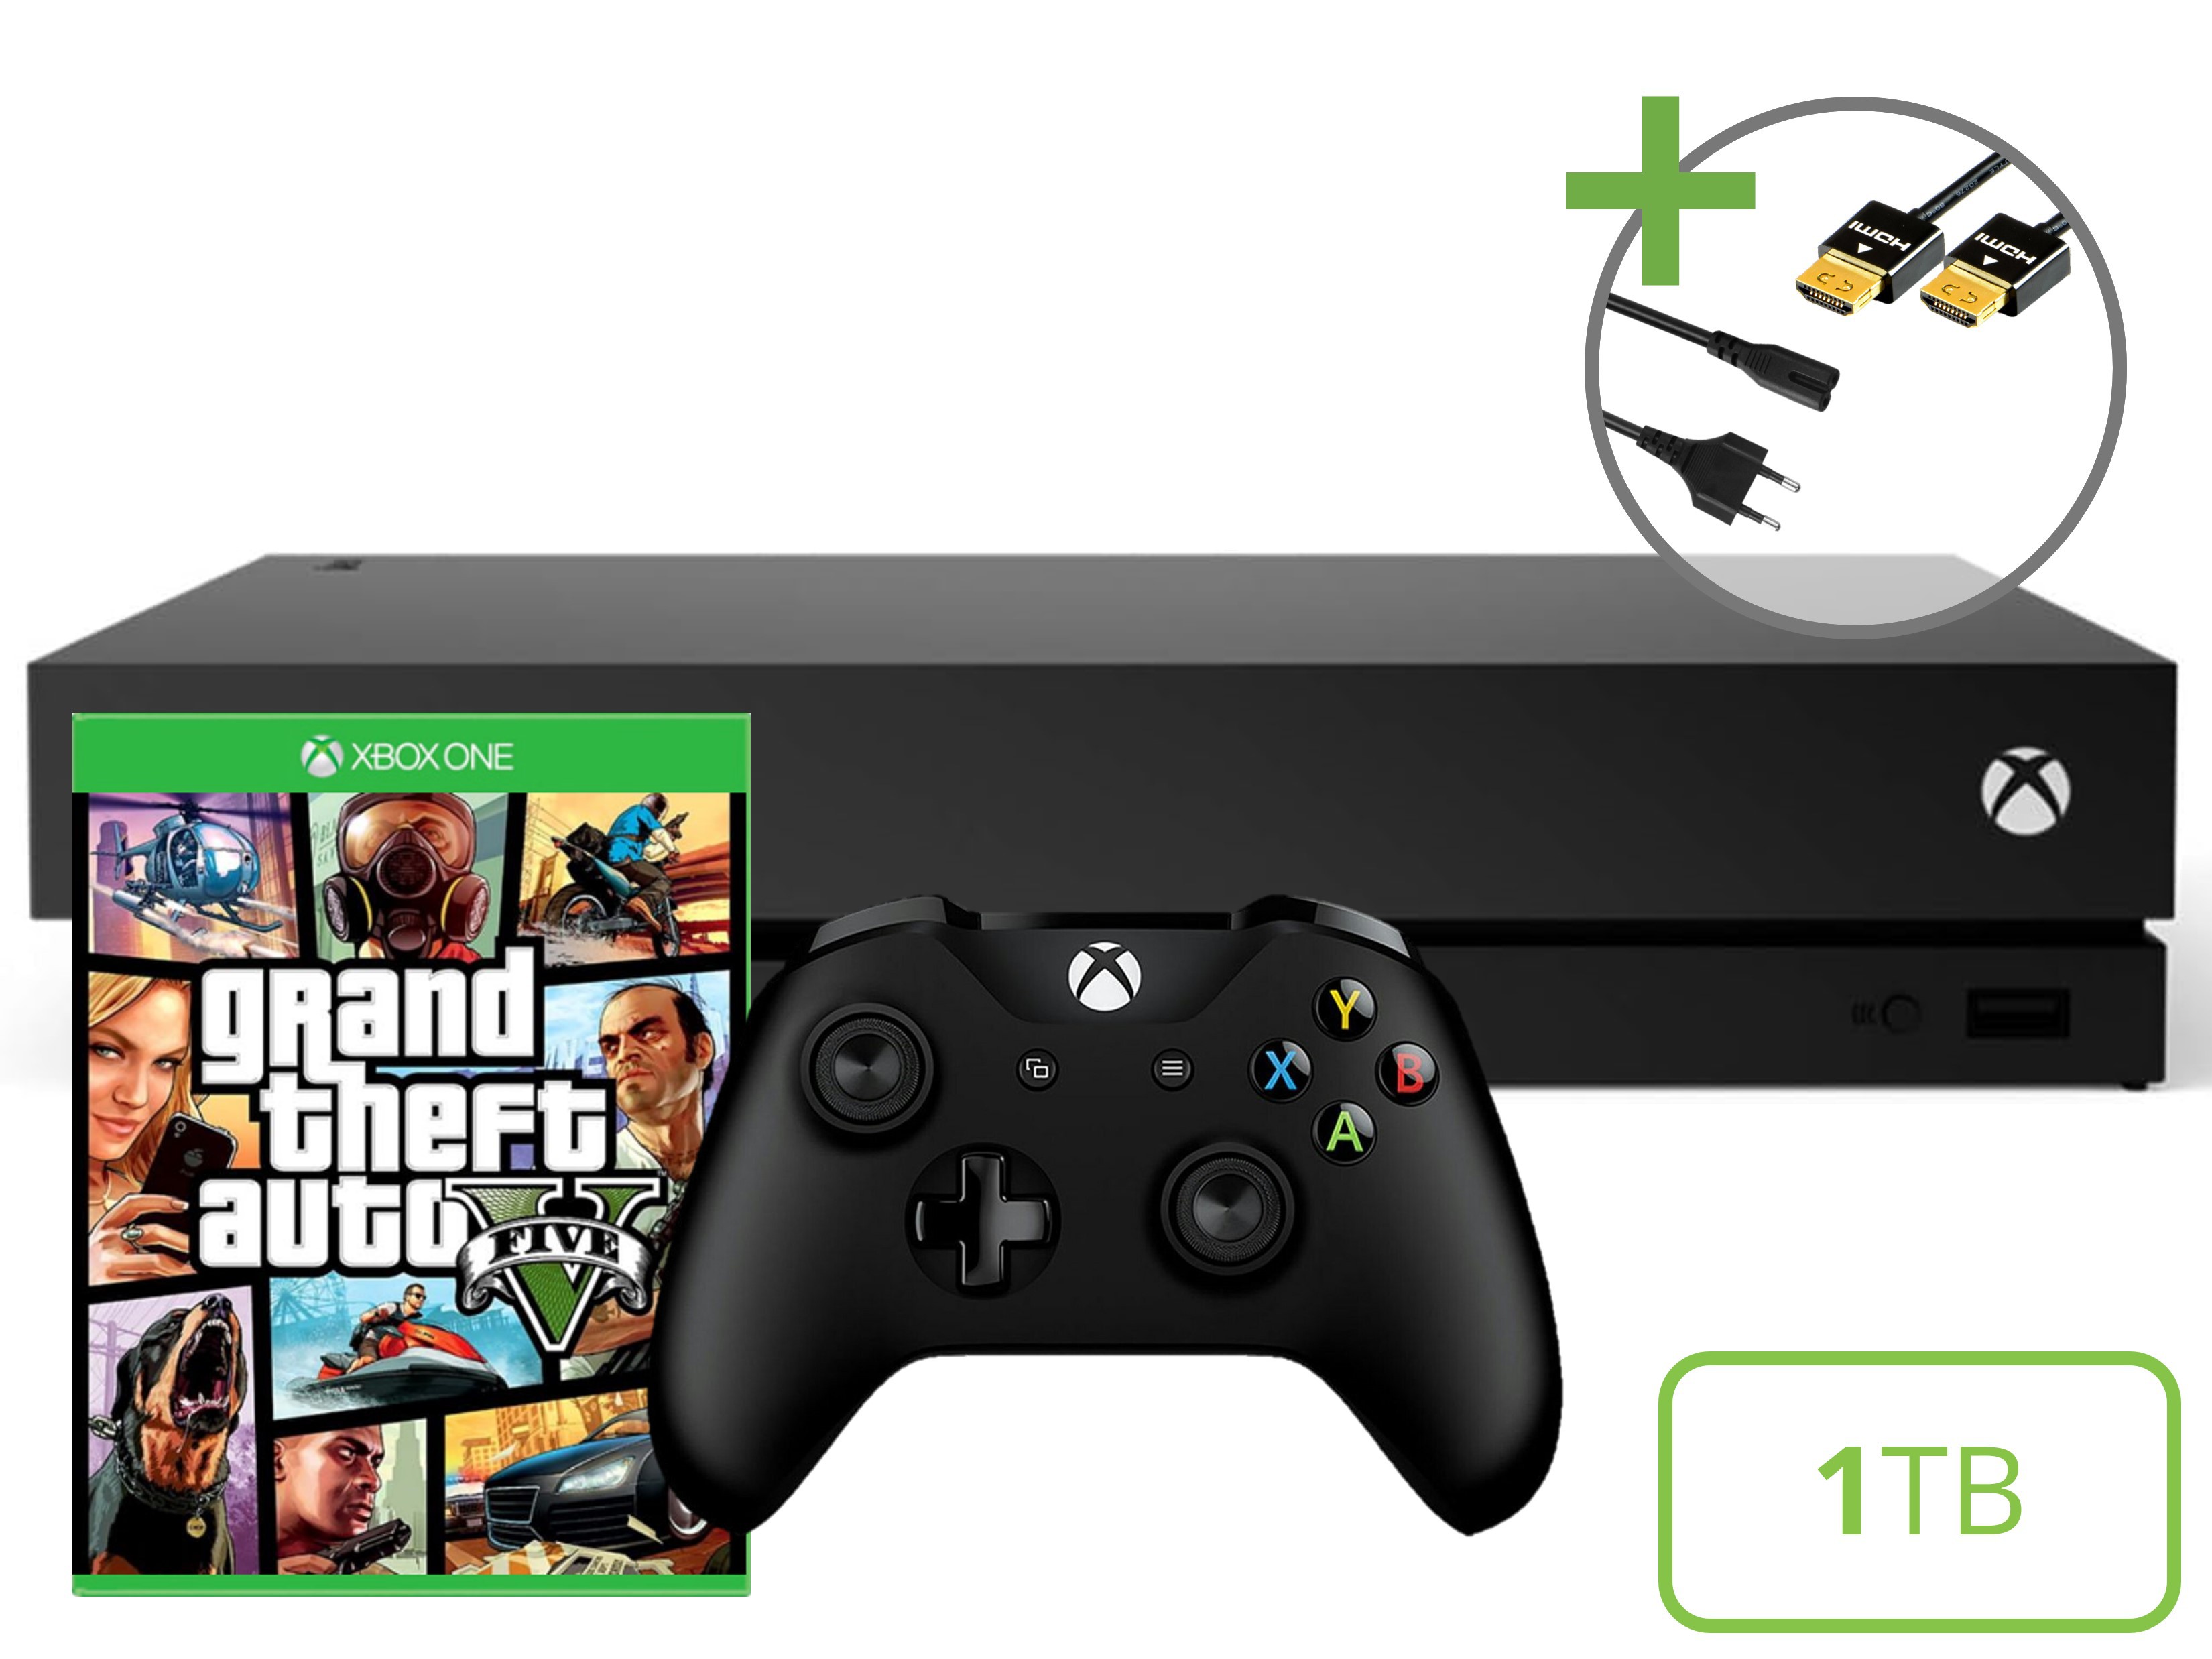 Microsoft Xbox One X Starter Pack - 1TB GTA V Edition - Xbox One Hardware